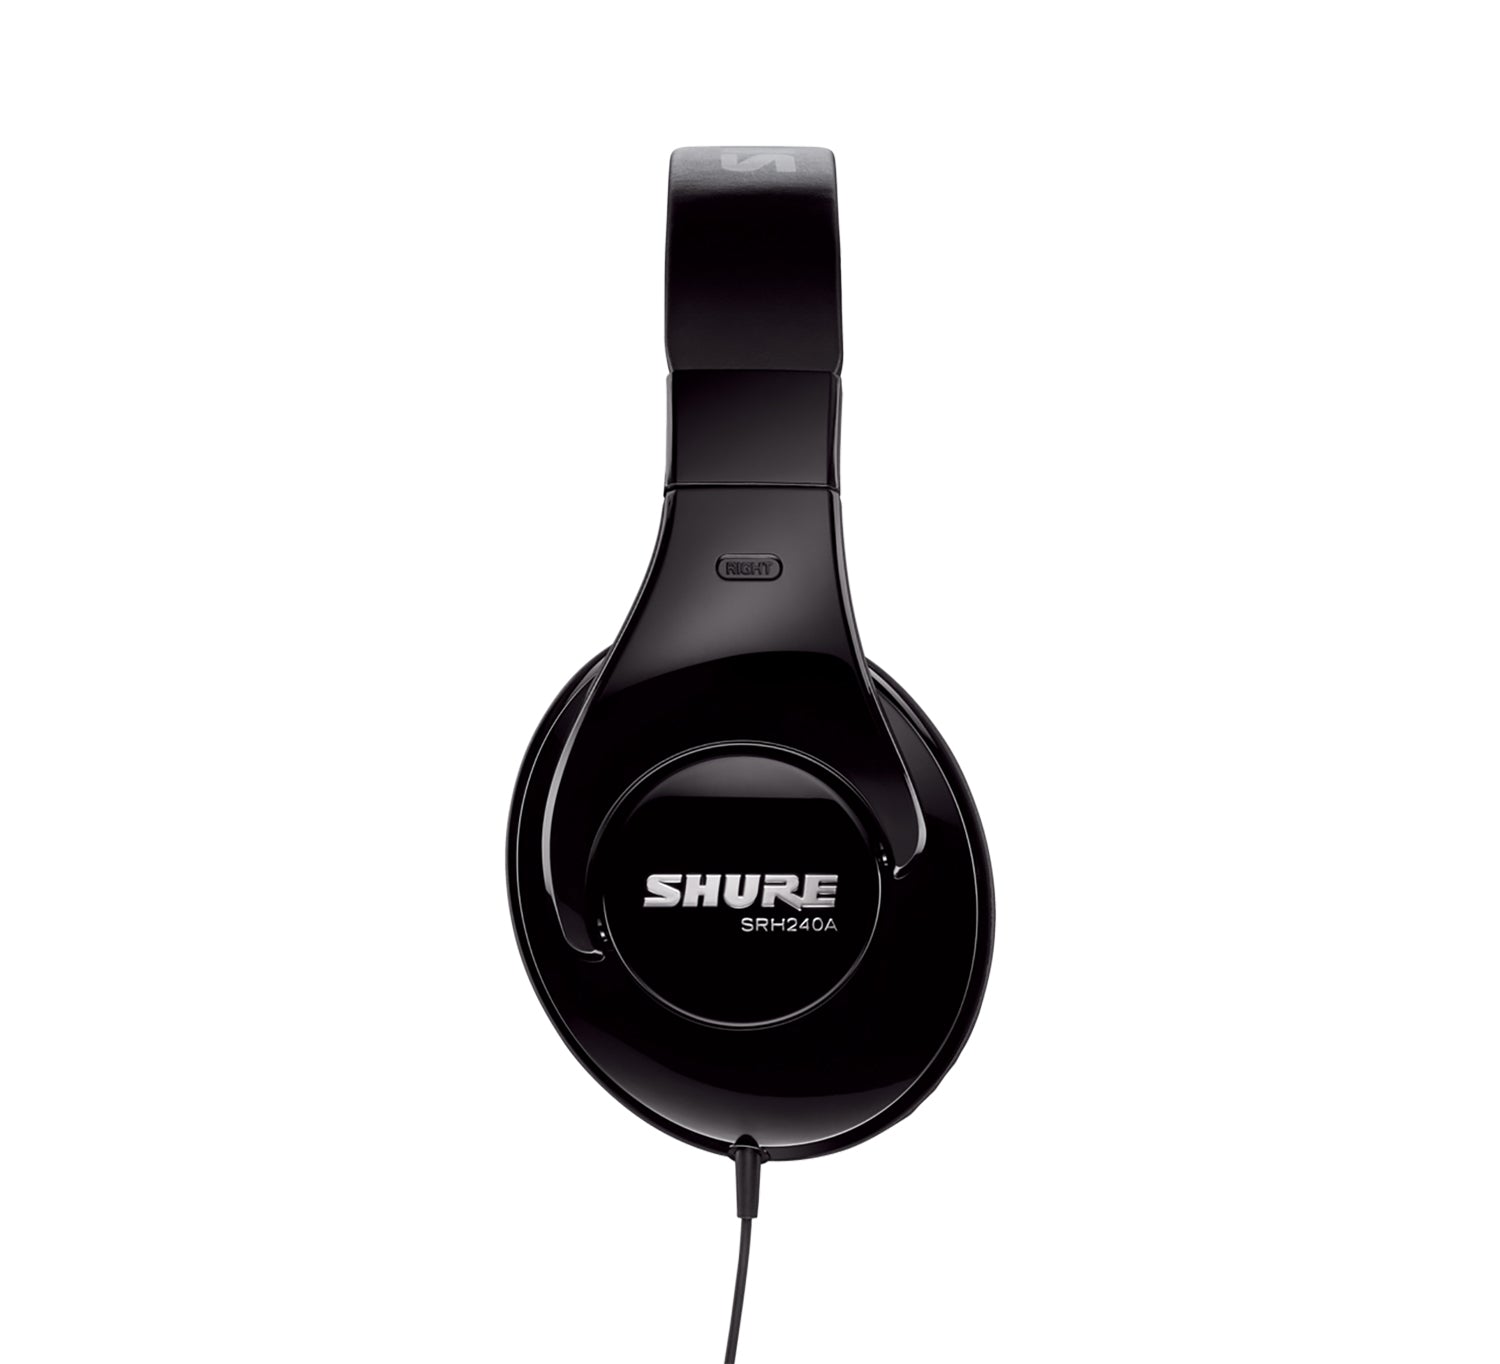 Shure SRH240A Professional Quality Headphones (Black) - Open Box - Hollywood DJ